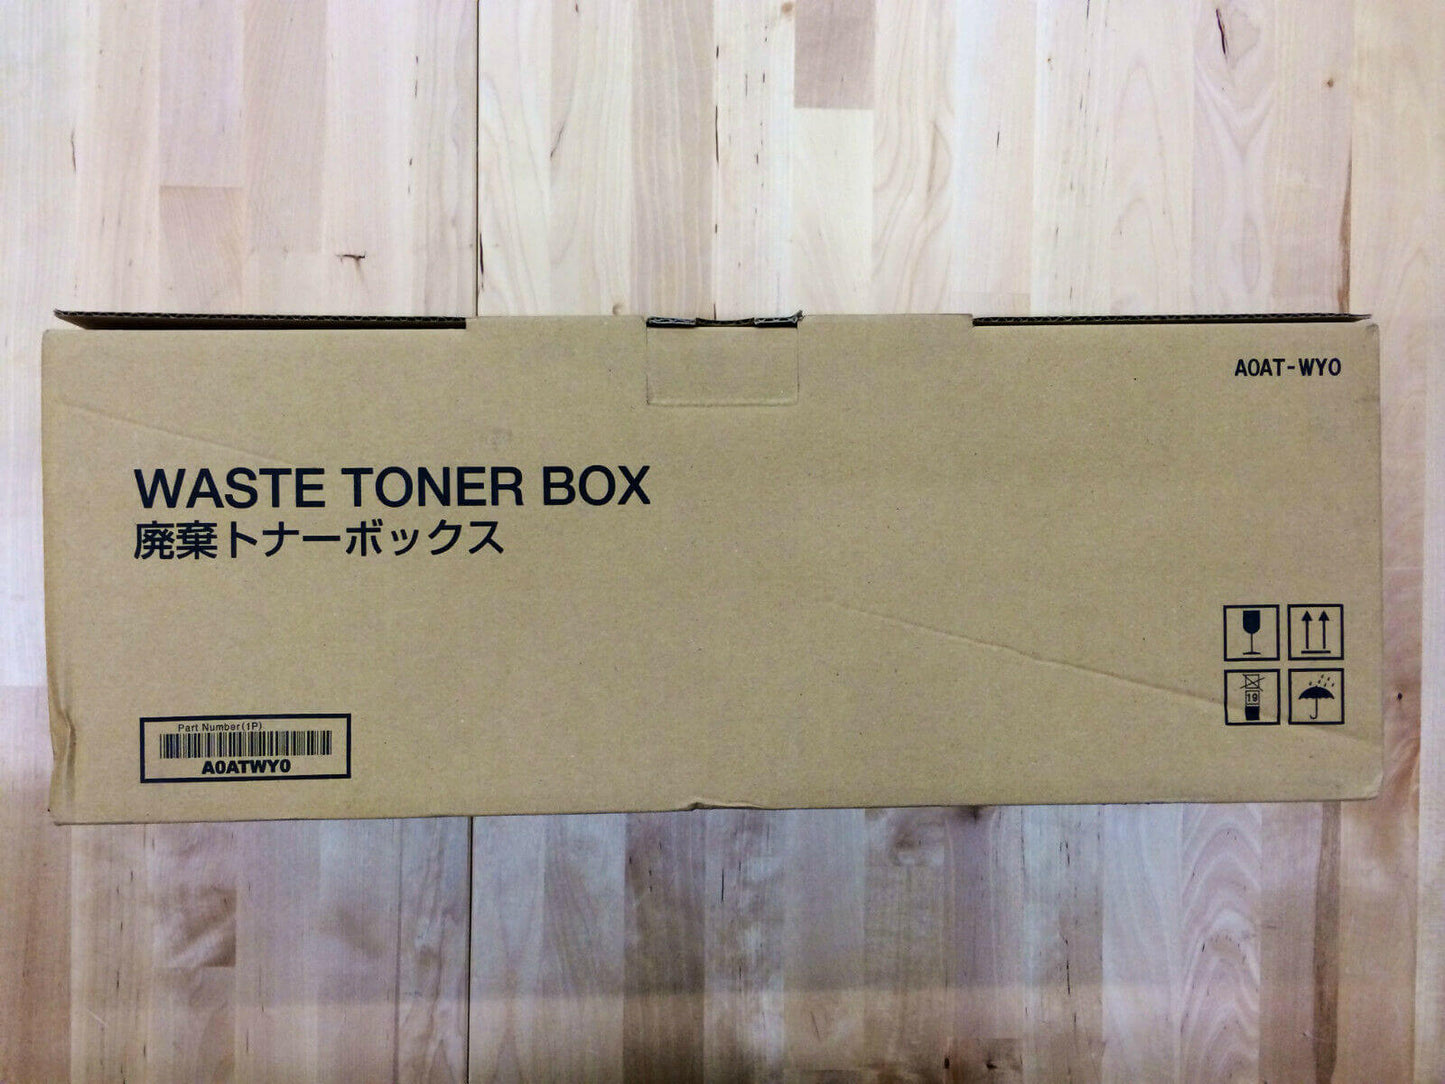 Genuine Konica Minolta Waste Toner Box A0AT-WY0, - copier-clearance-center